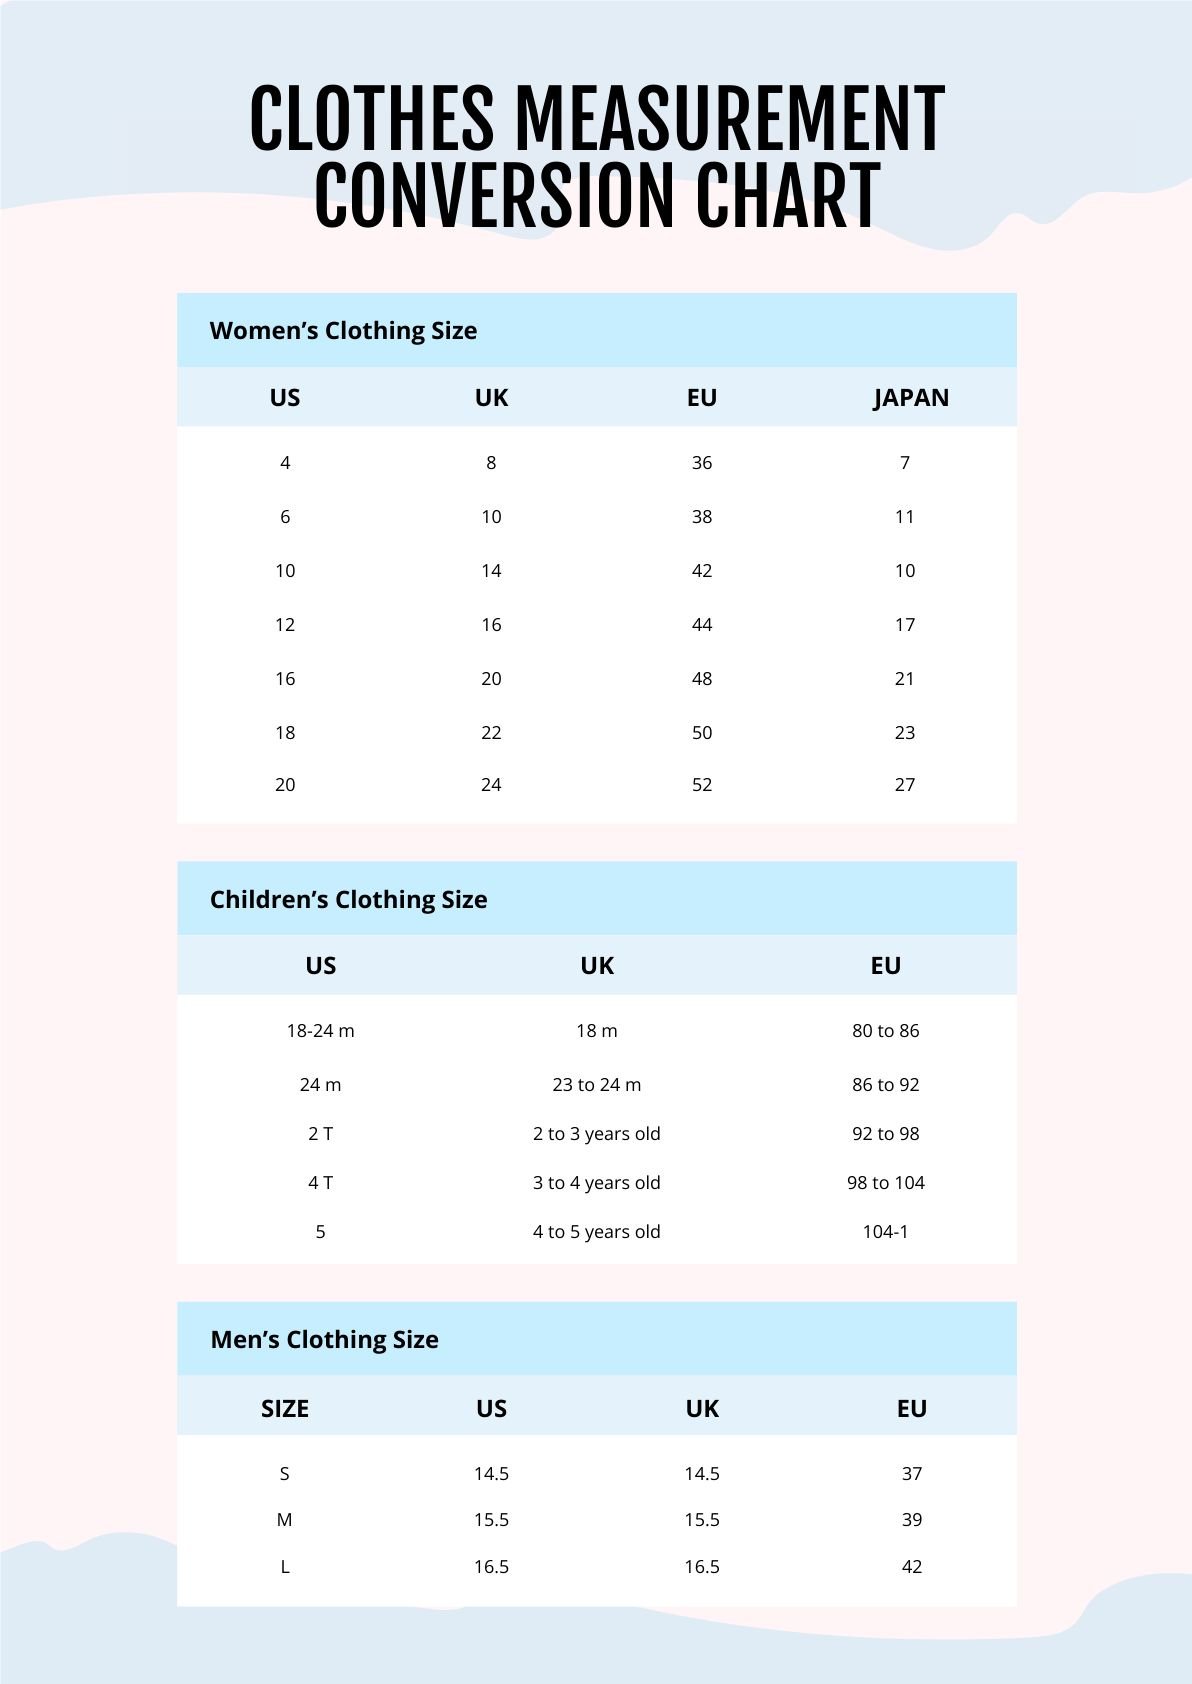 Clothes Measurement Conversion Chart in PDF